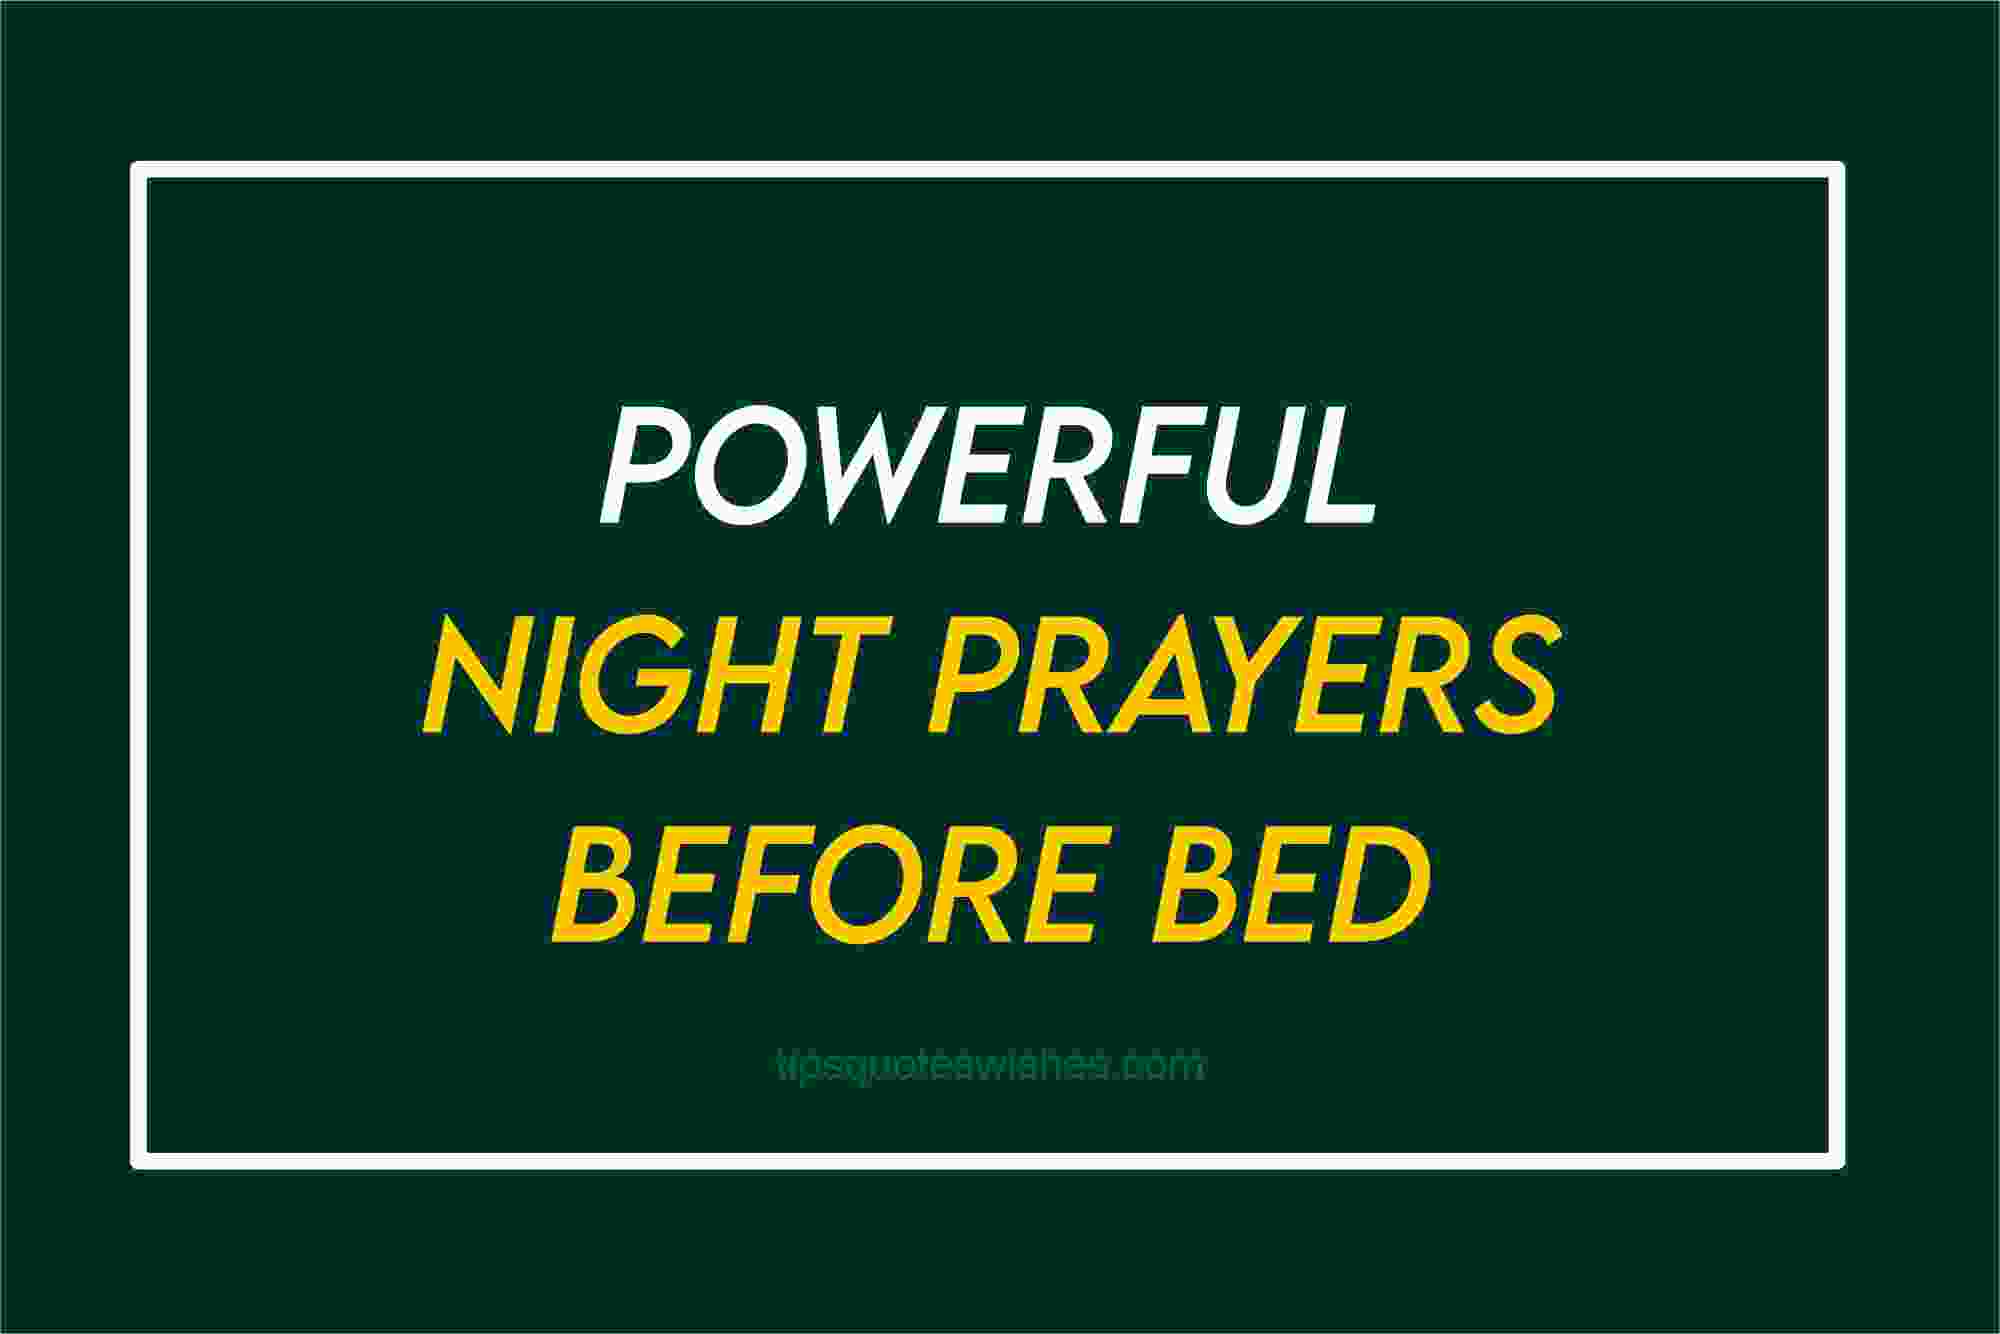 Powerful Night Prayer For Family